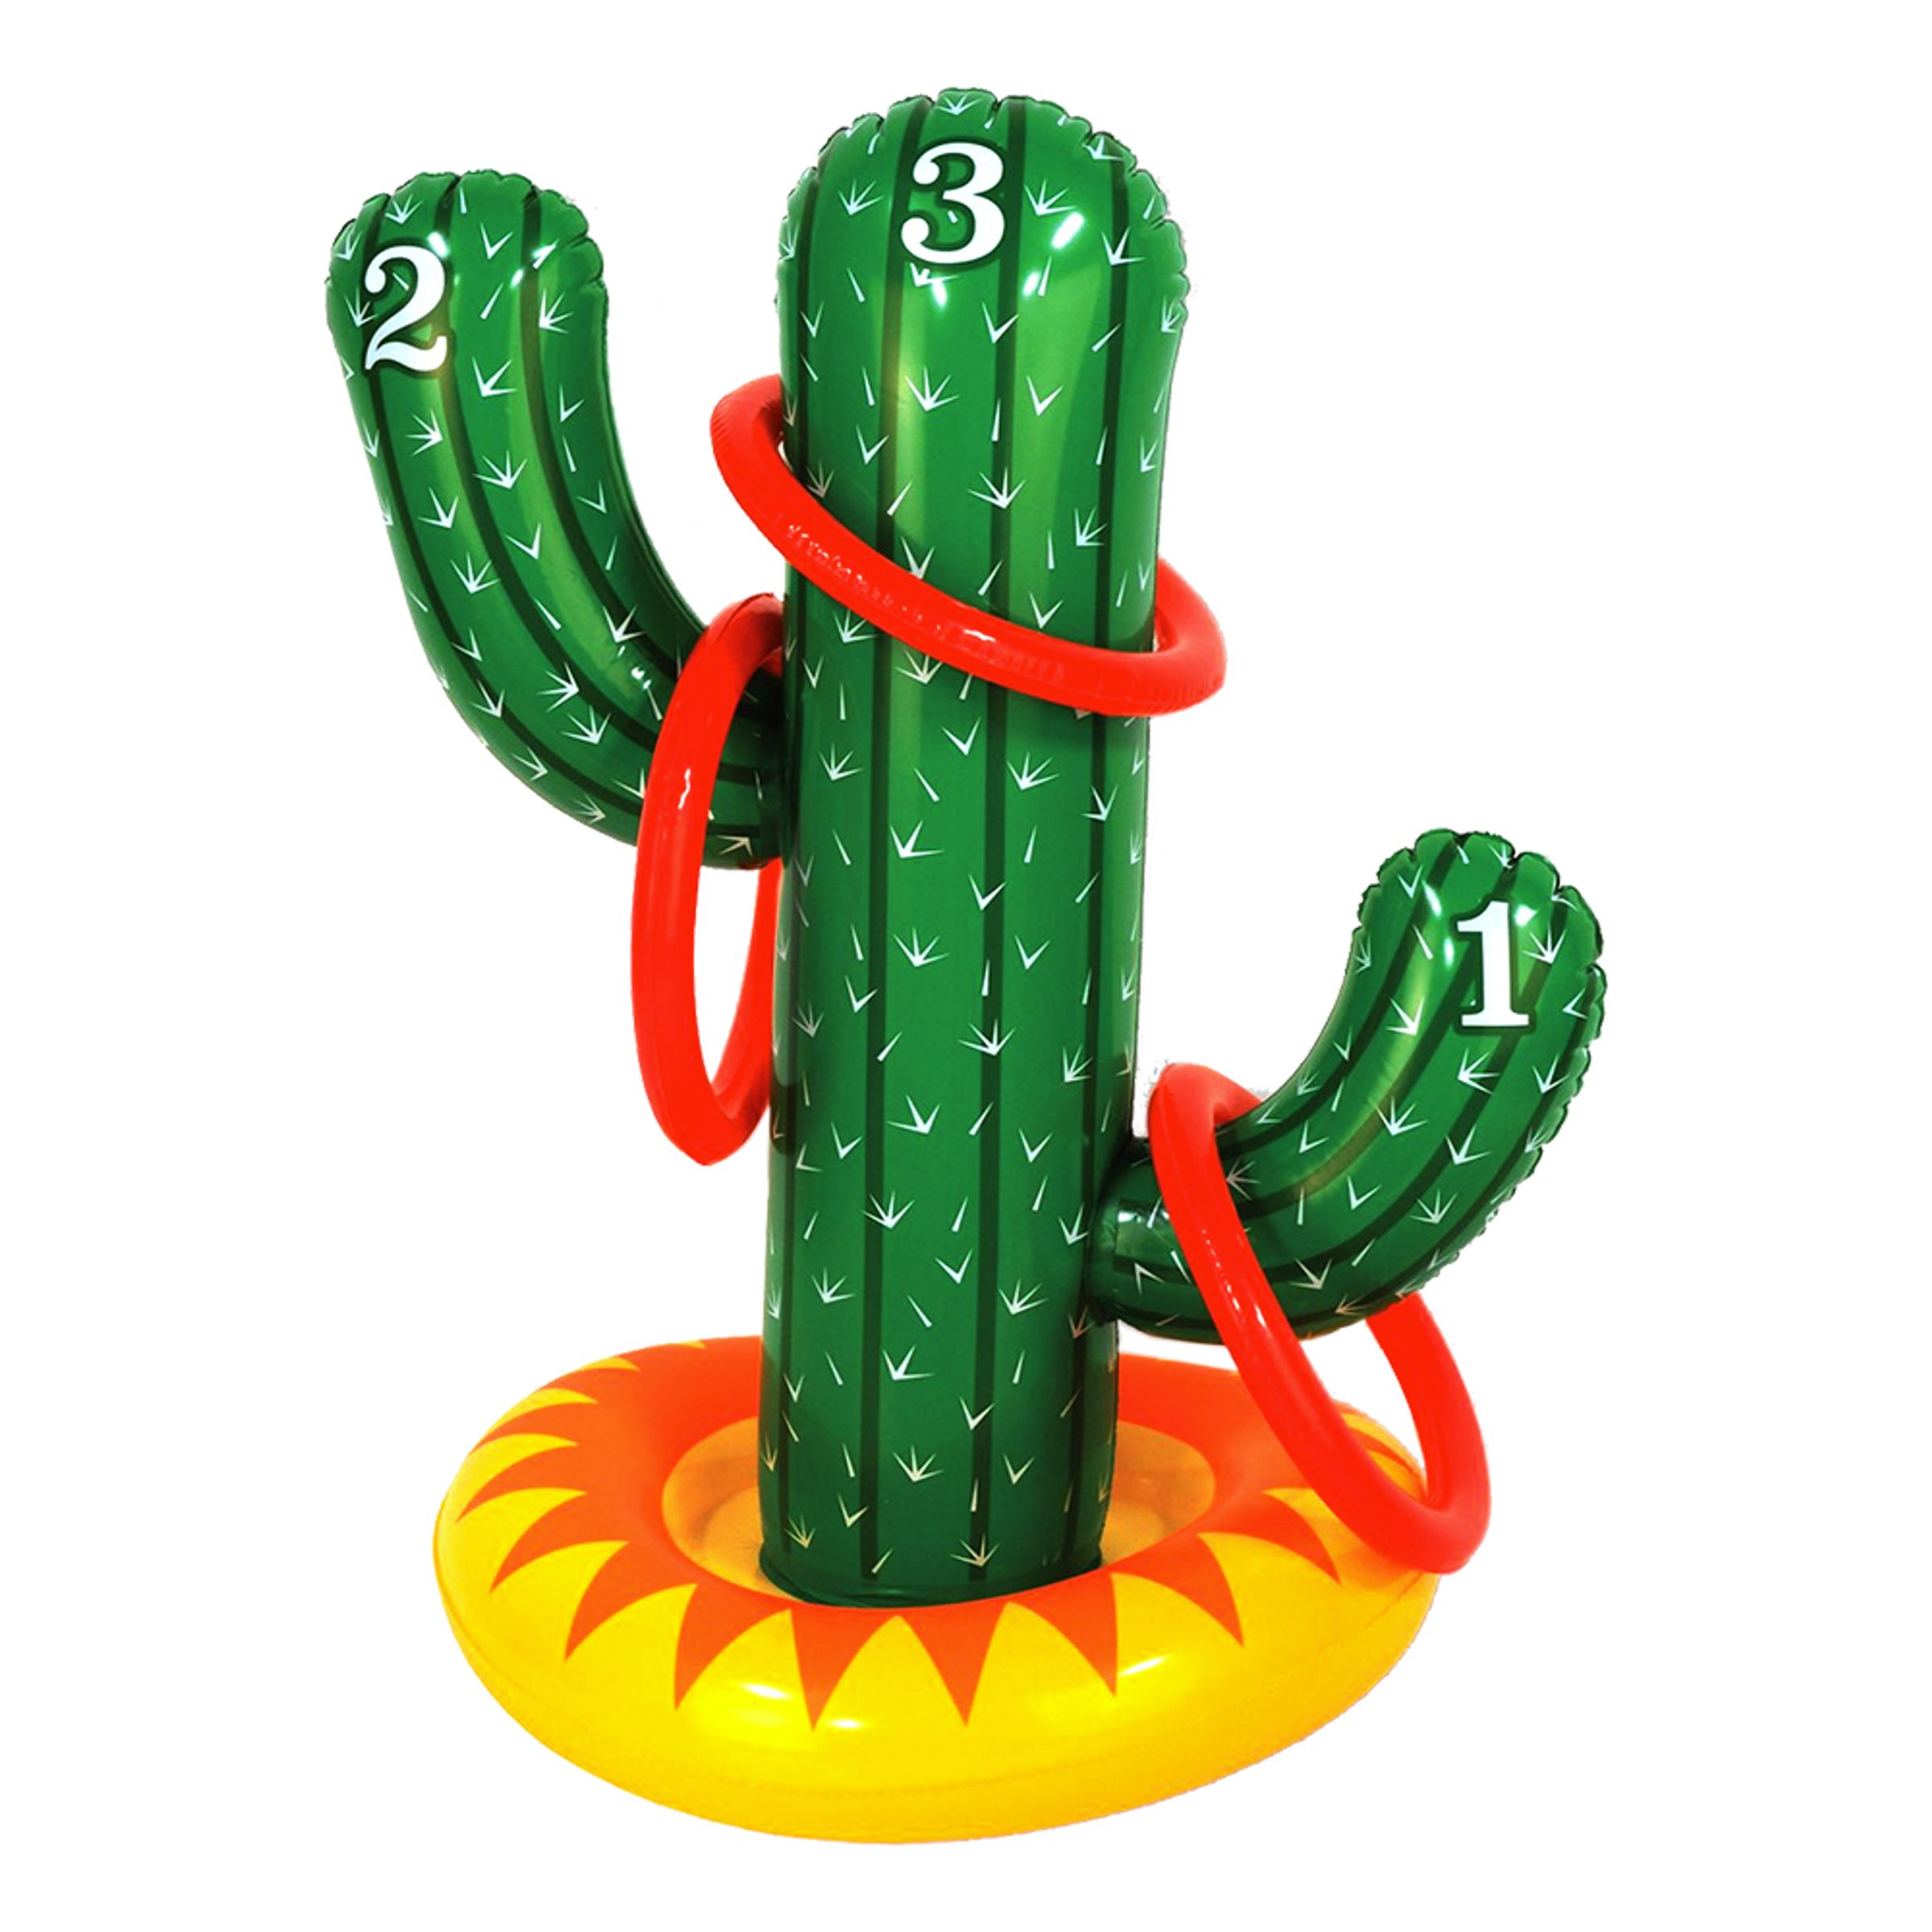 Ring Toss Uppblåsbar Kaktus